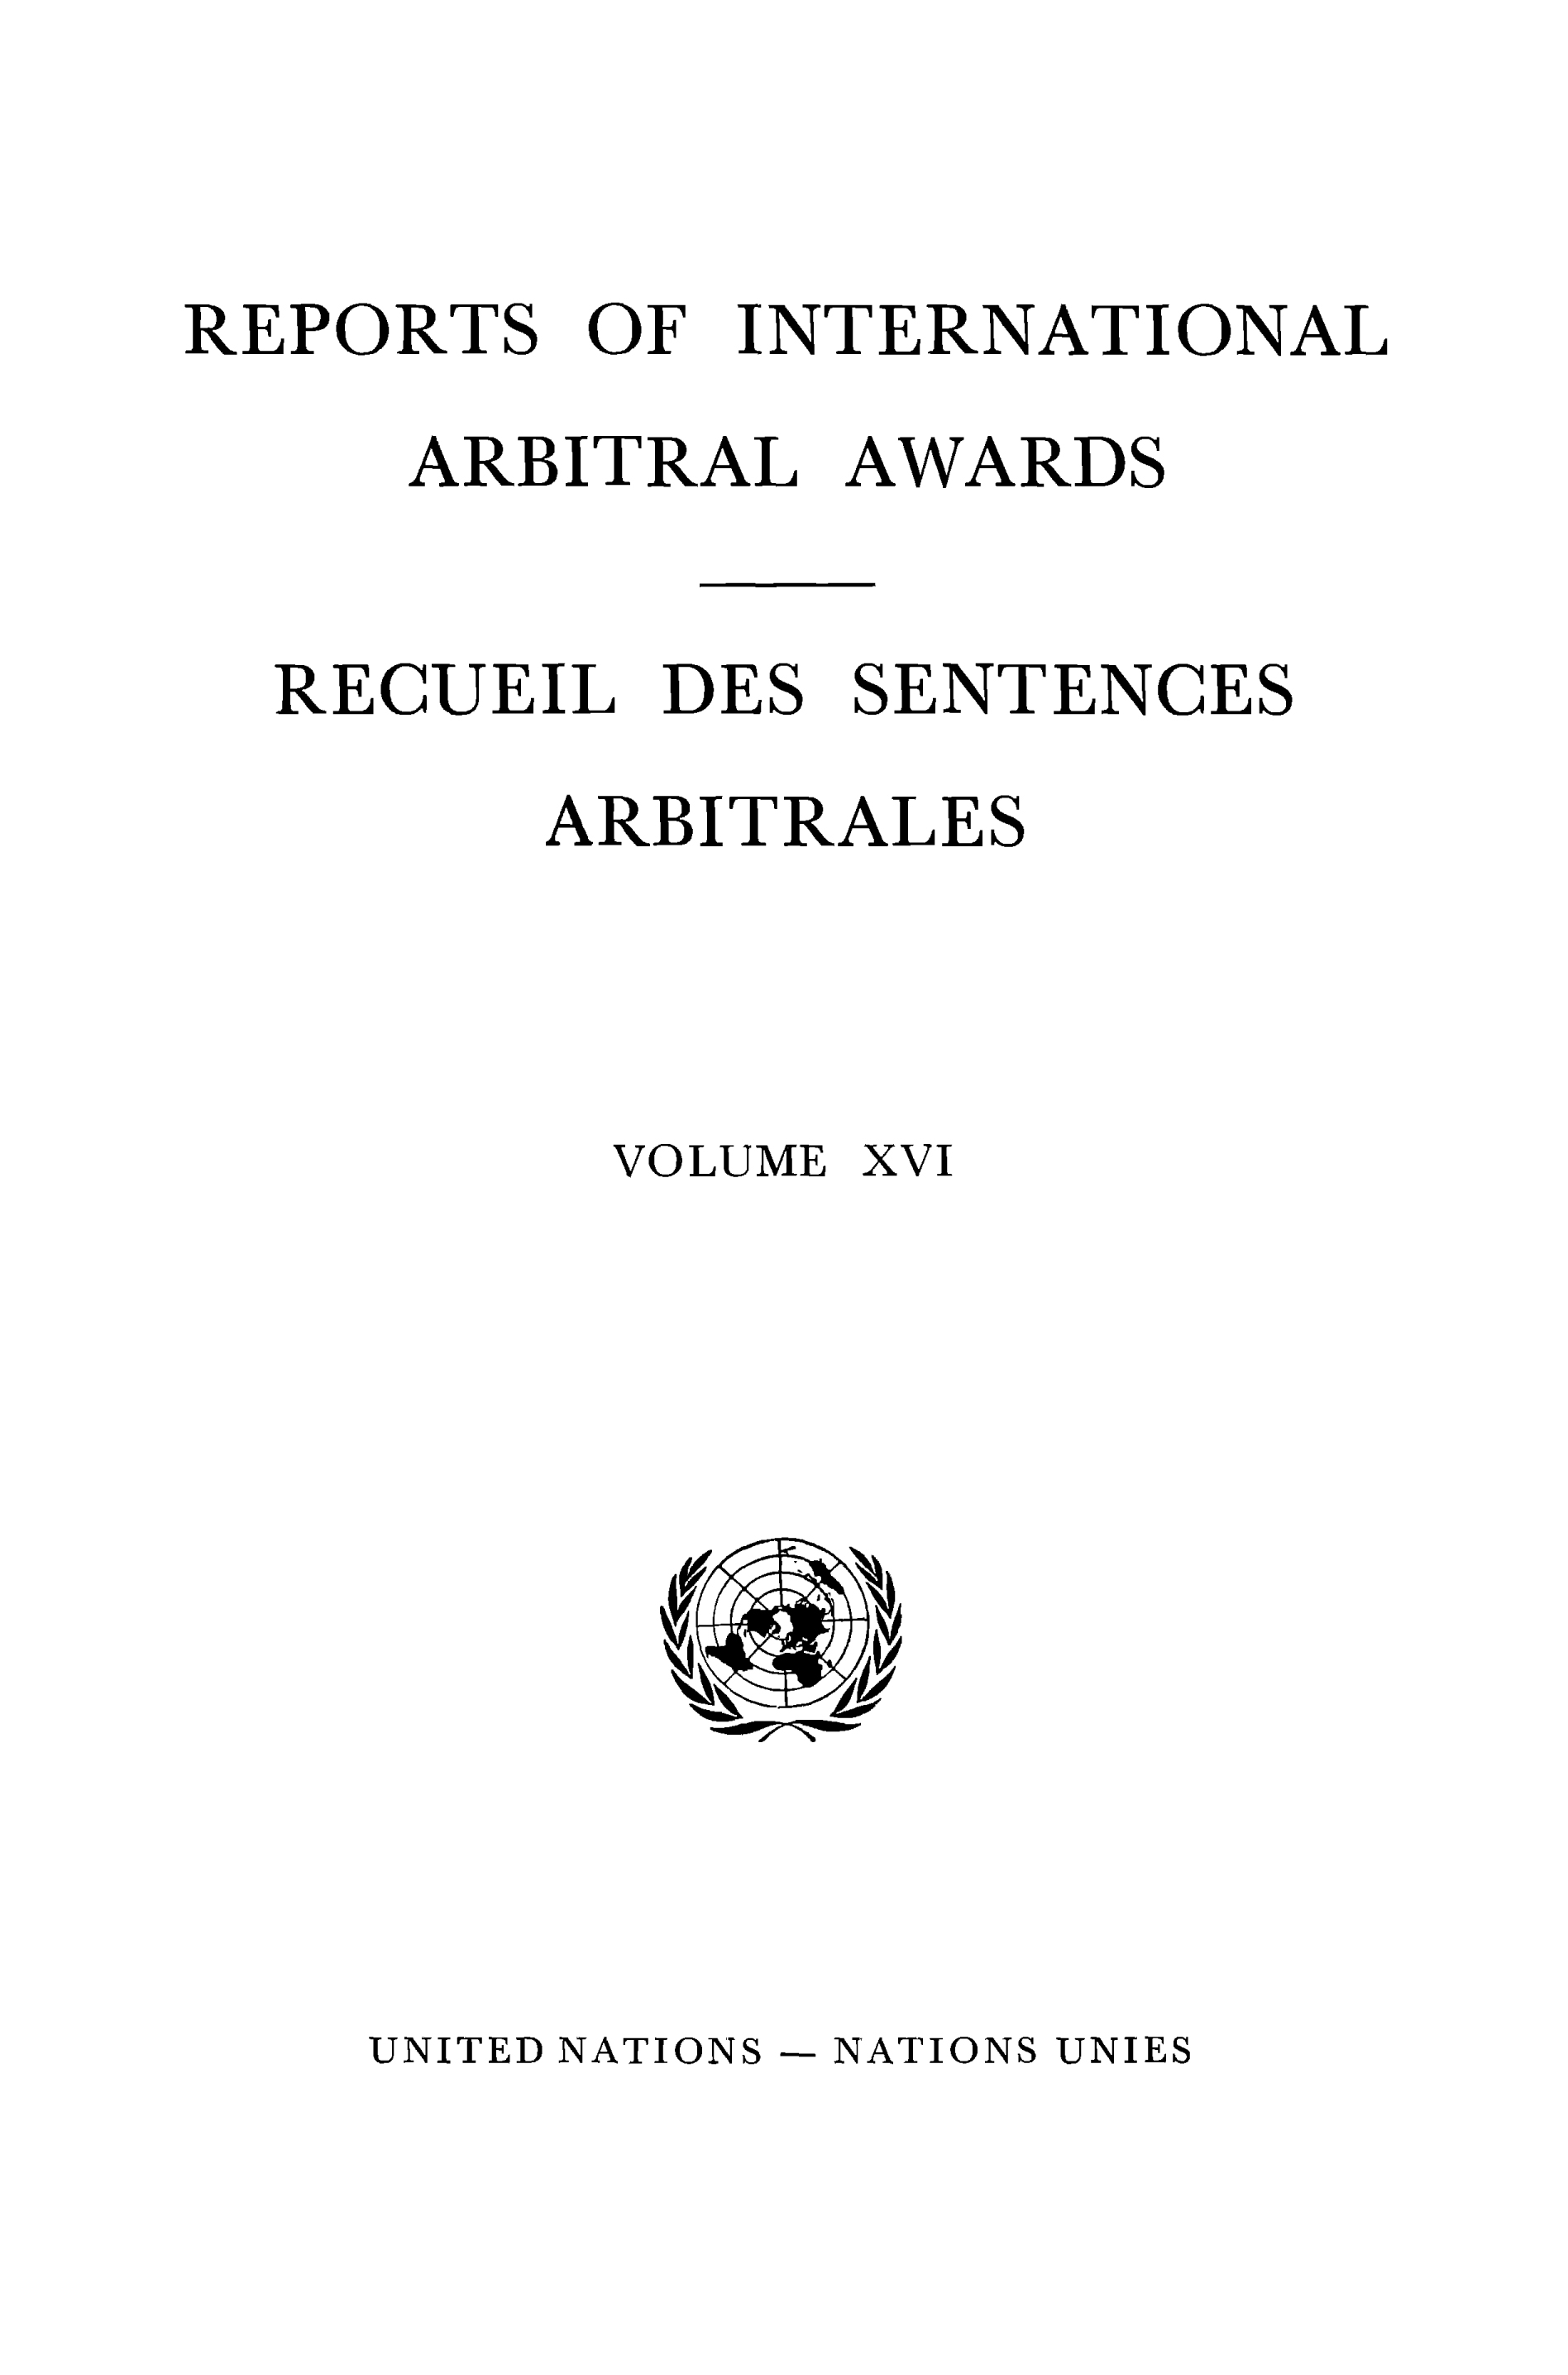 image of Reports of International Arbitral Awards, Vol. XVI